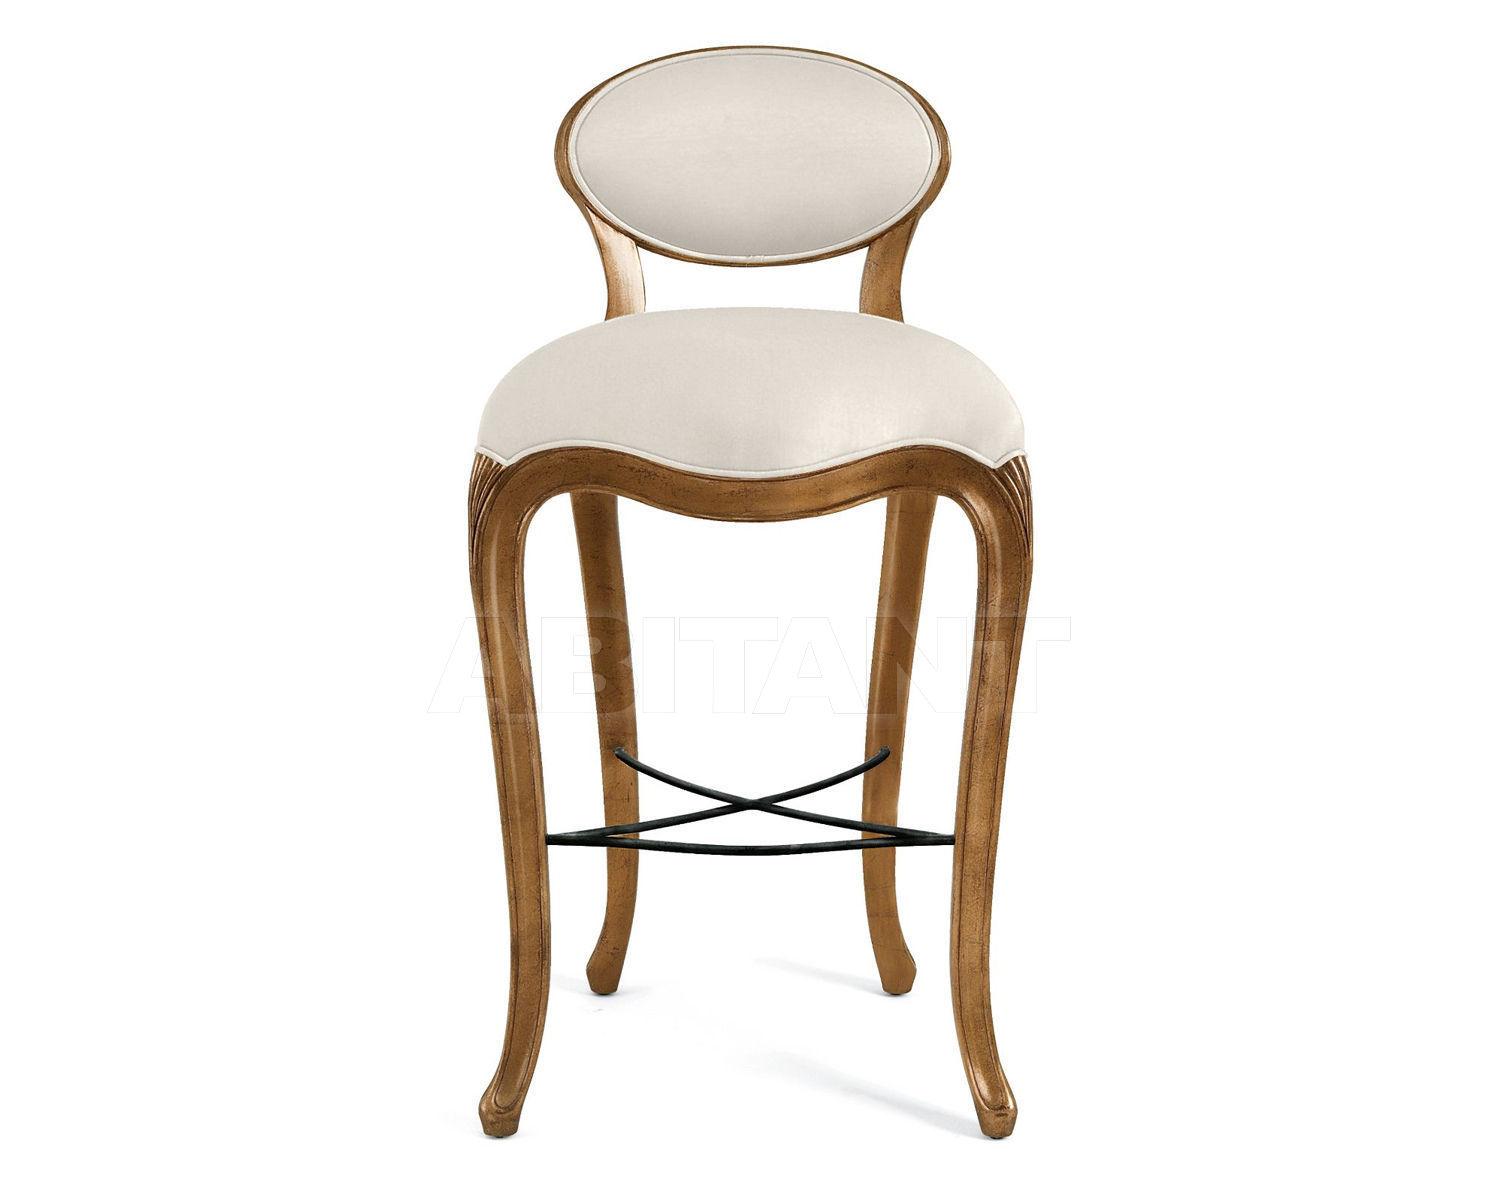 Buy Bar stool Cafe de Paris Christopher Guy 2014 60-0024-CC Moonstone